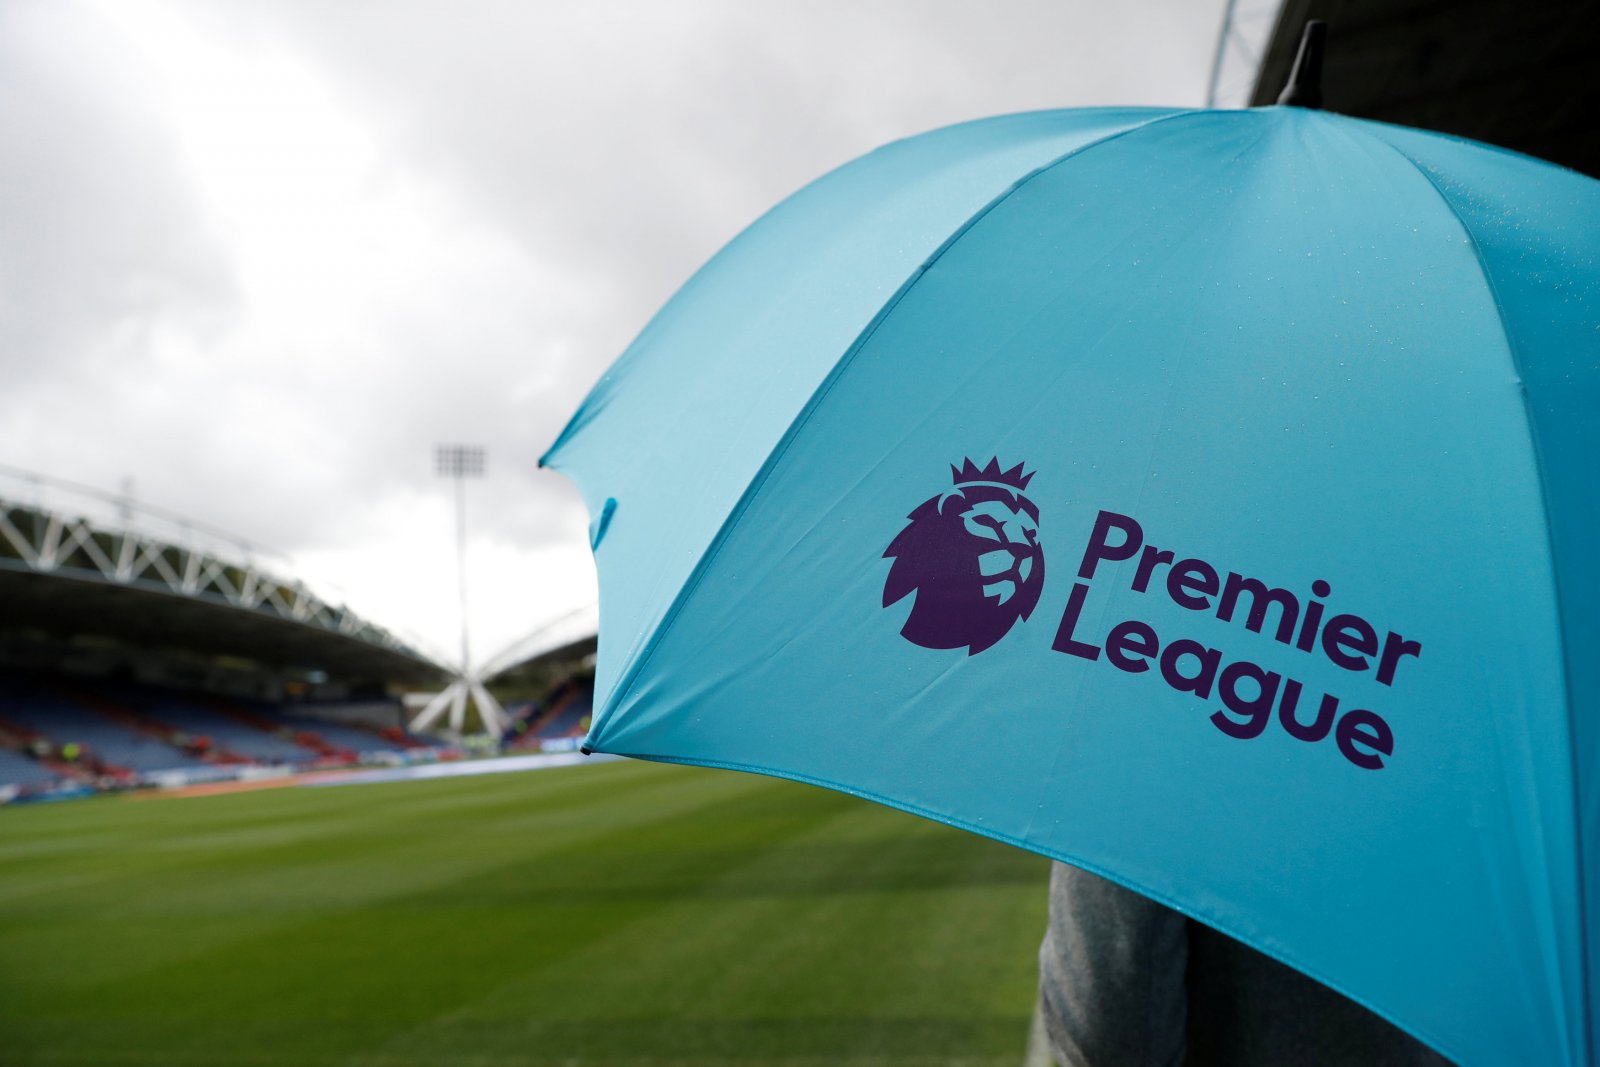 Premier League logo on umbrella